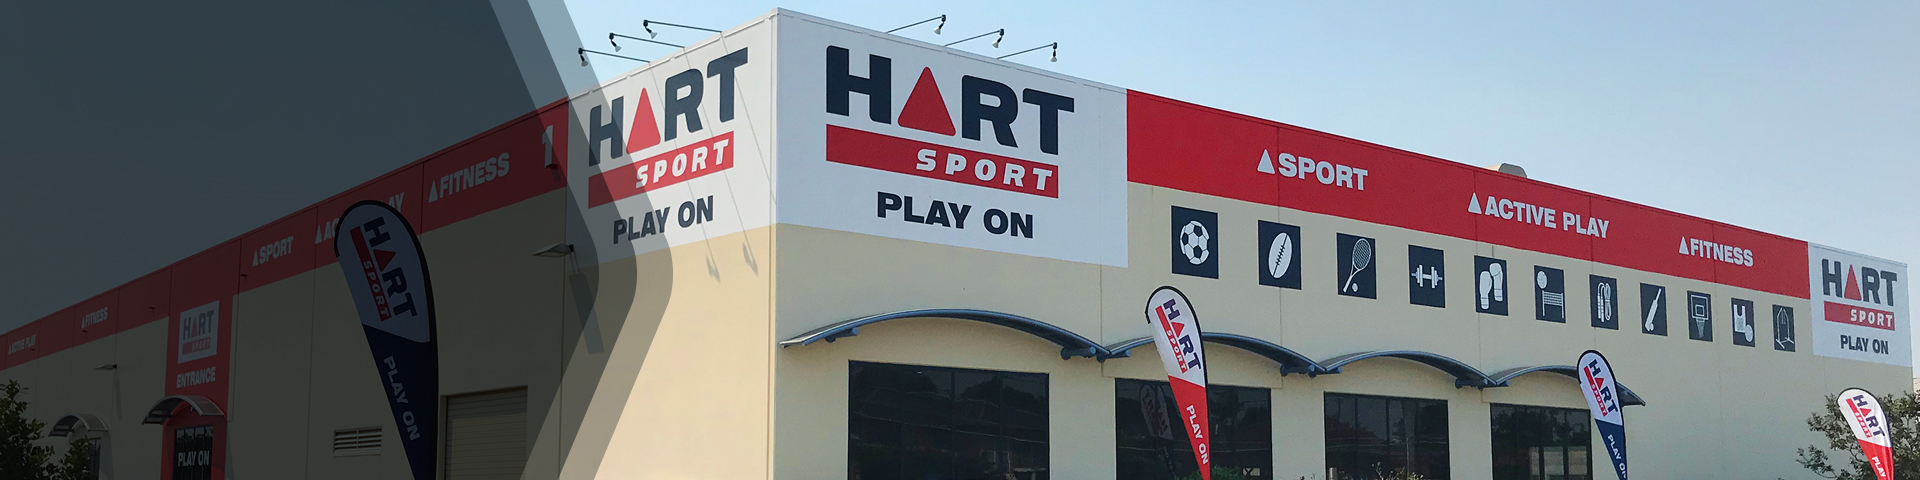 HART Sport Office